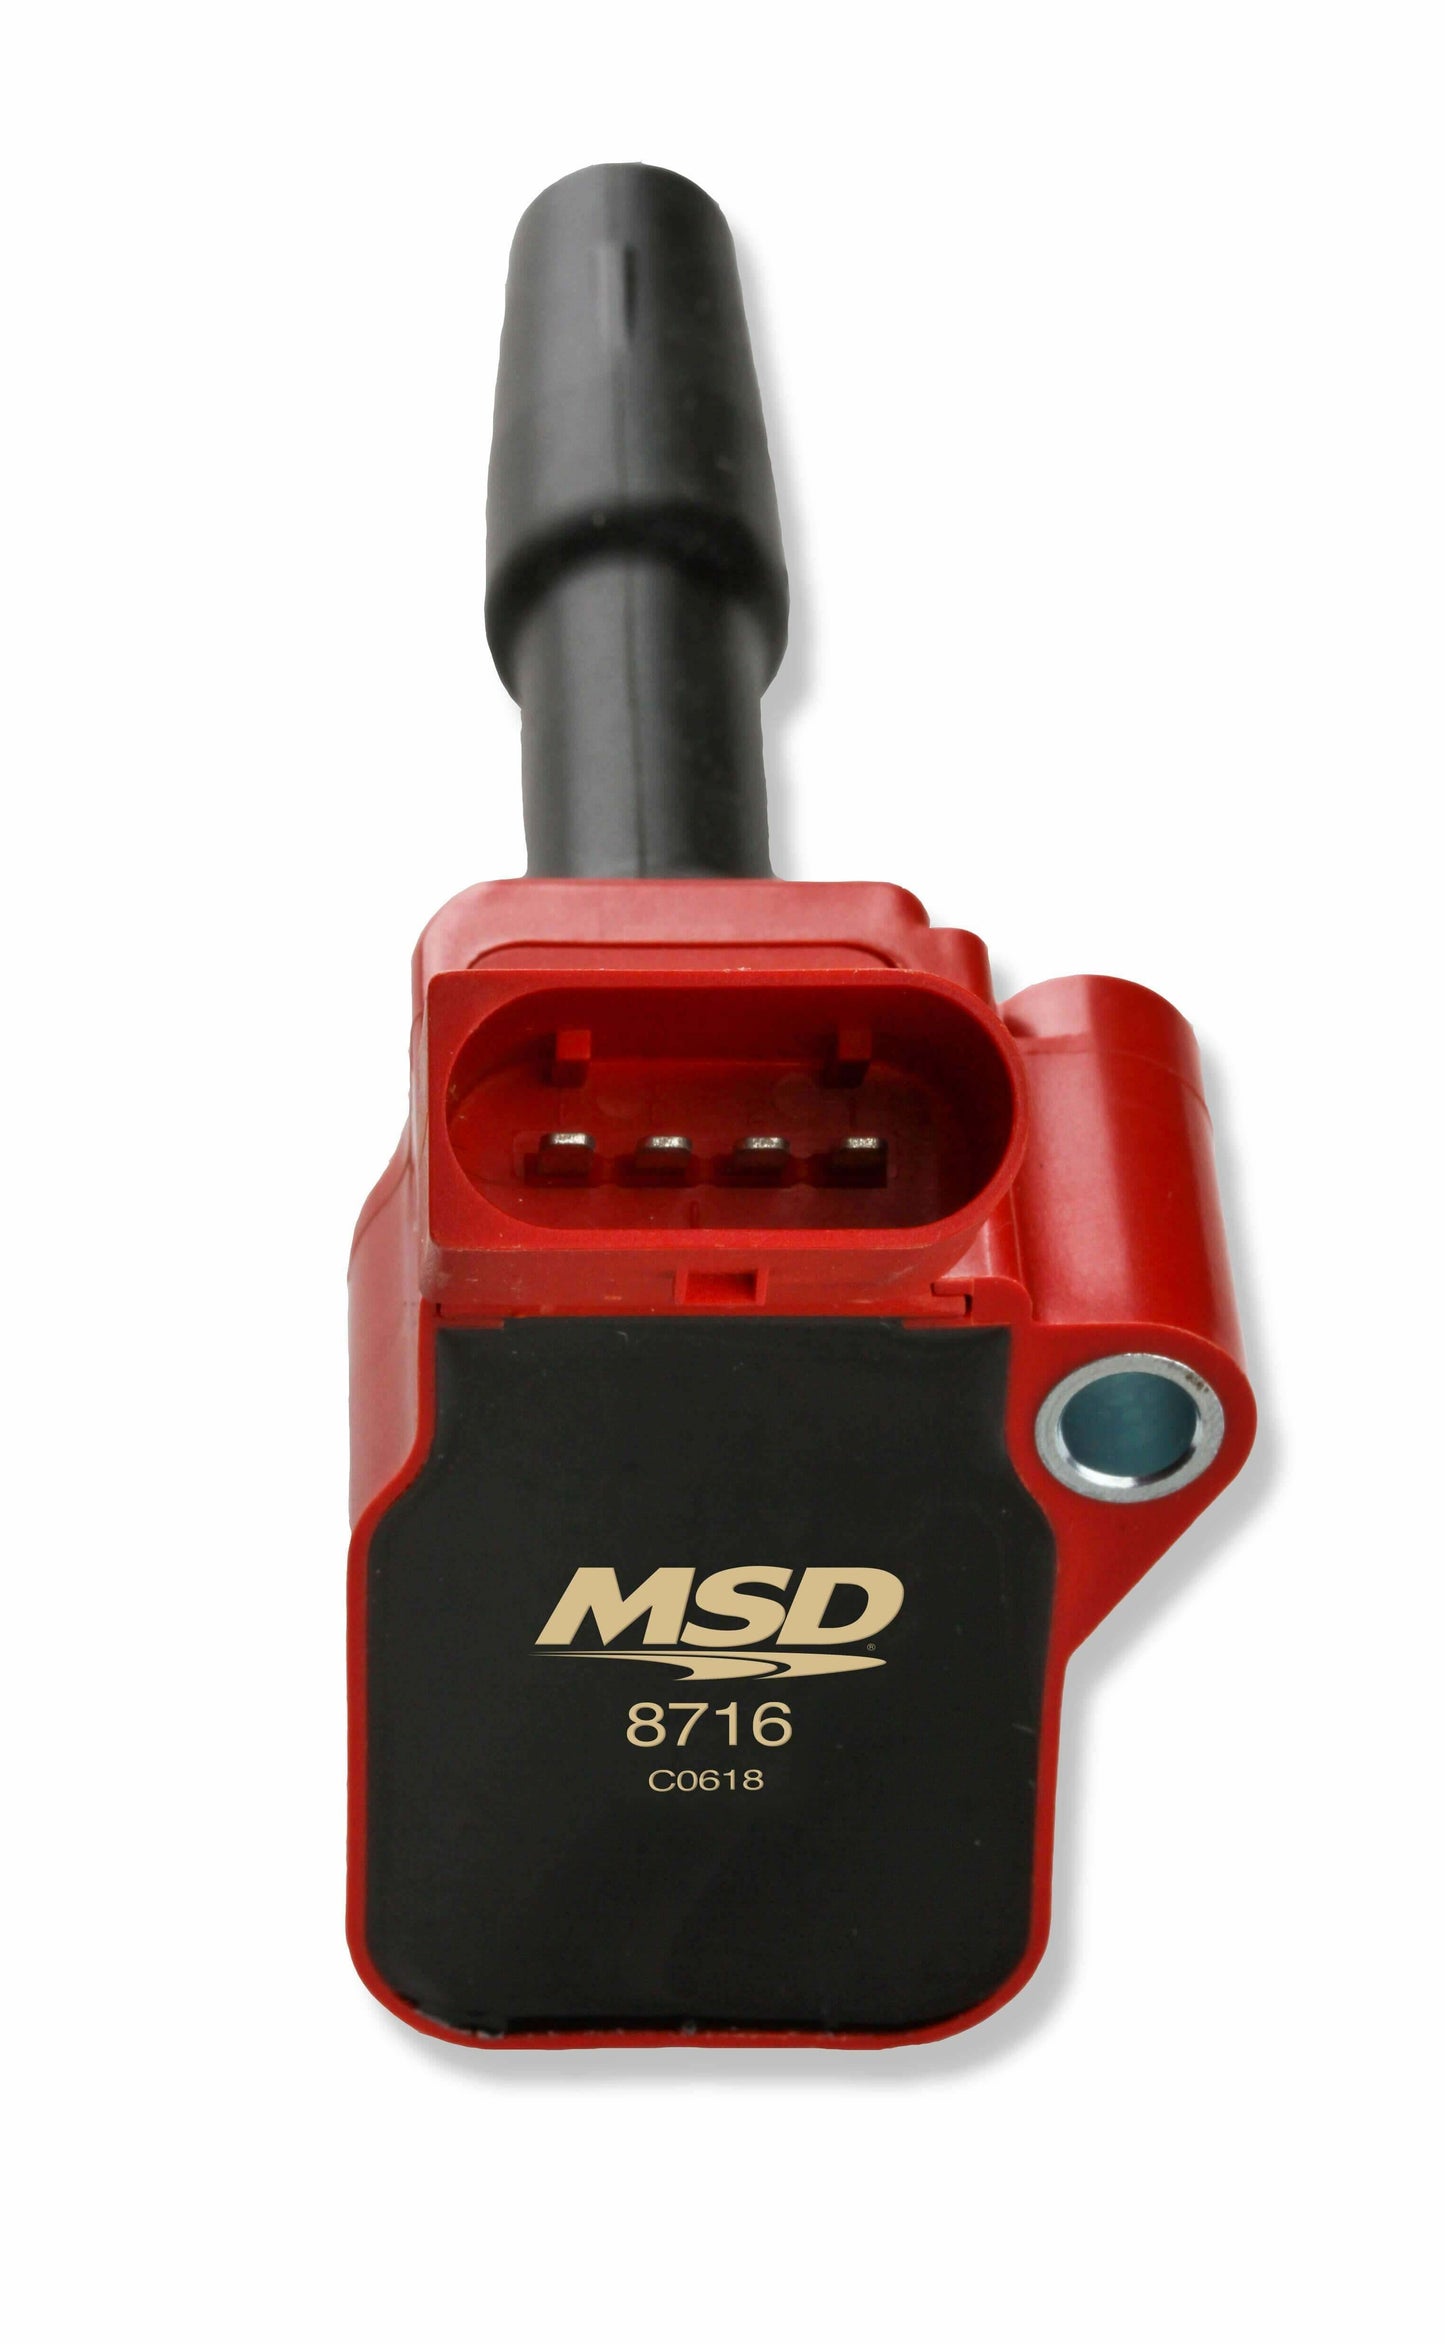 MSD Ignition Coils Blaster Series 2014-2019 VW/Audi 4 Cylinder, Red 4-pack  87164